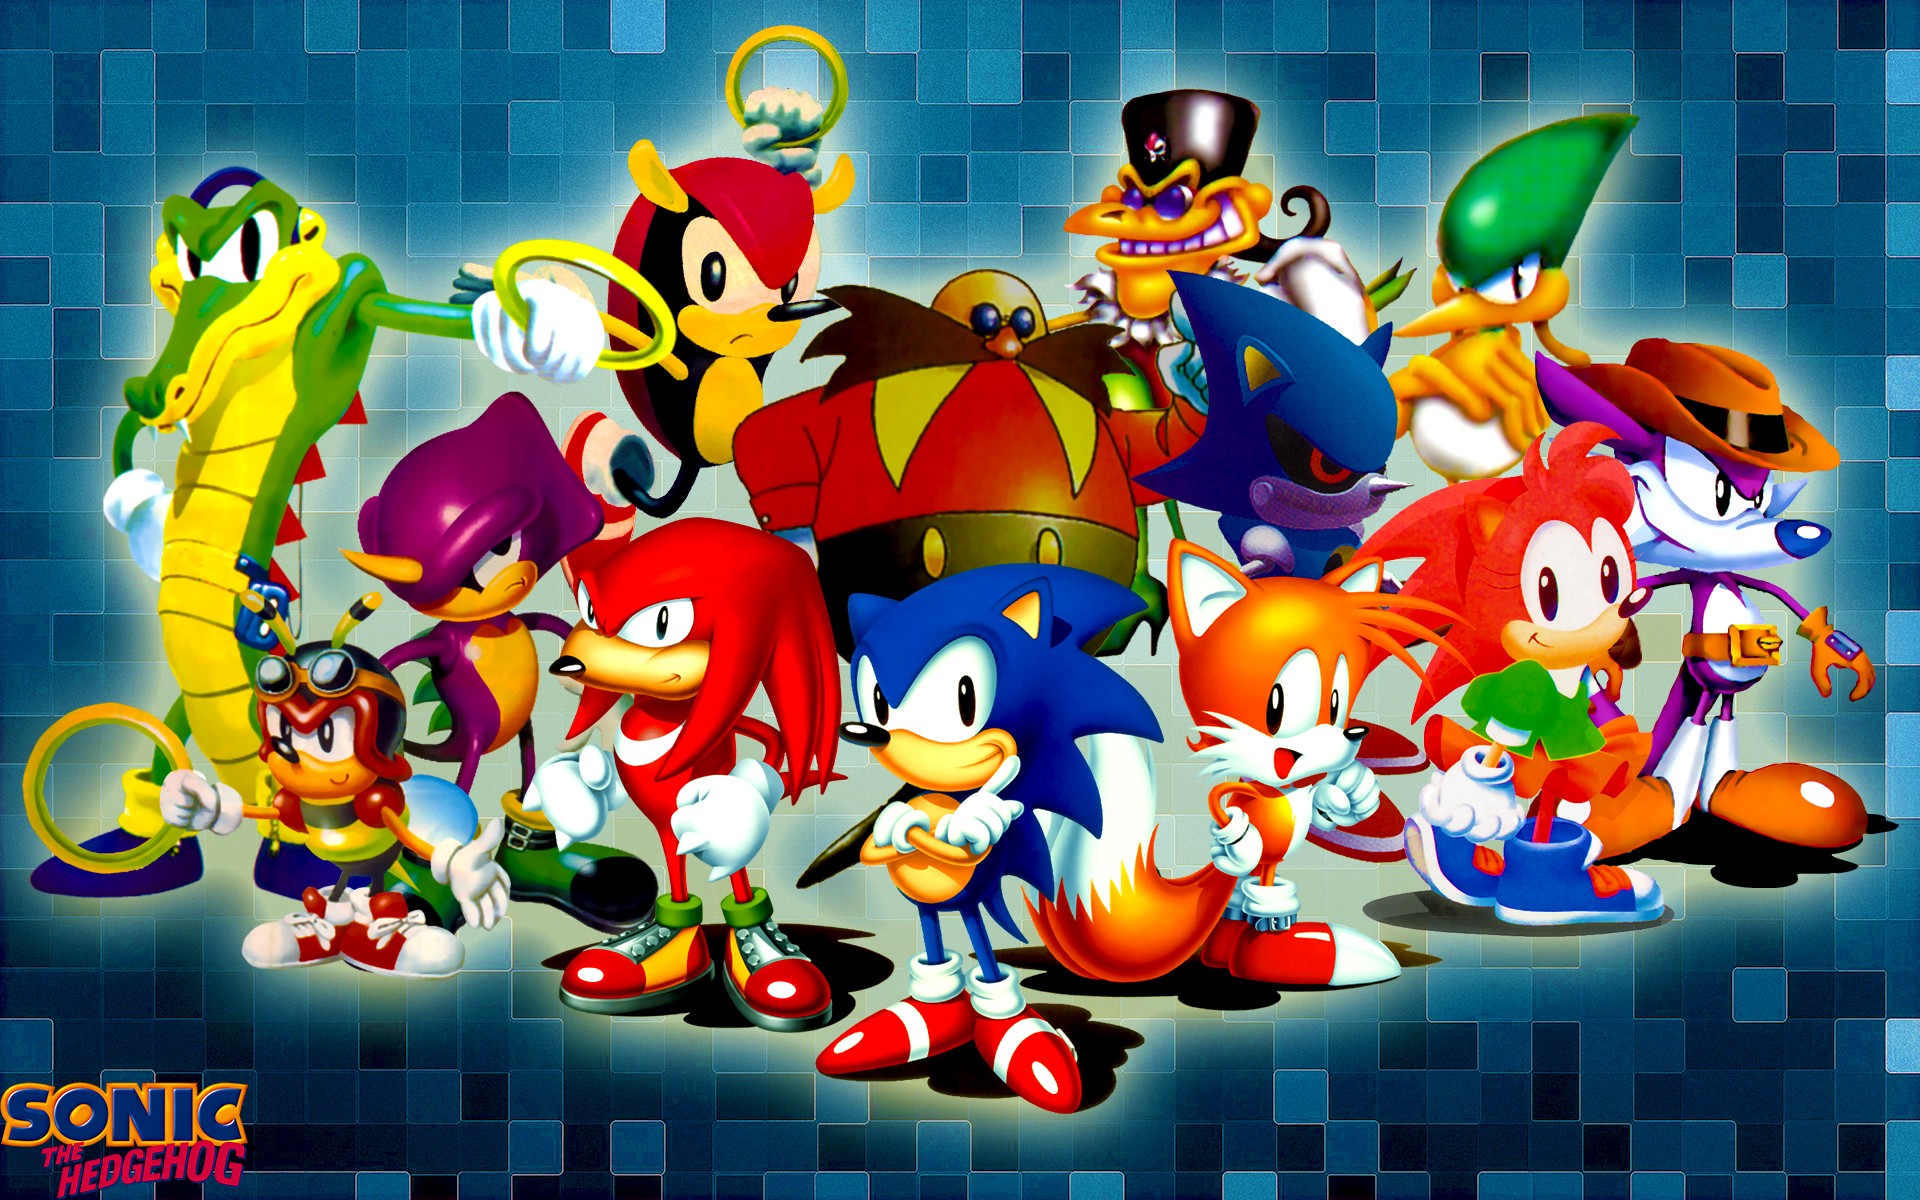 Video Game Sonic the Hedgehog HD Wallpaper by SonicTheHedgehogBG